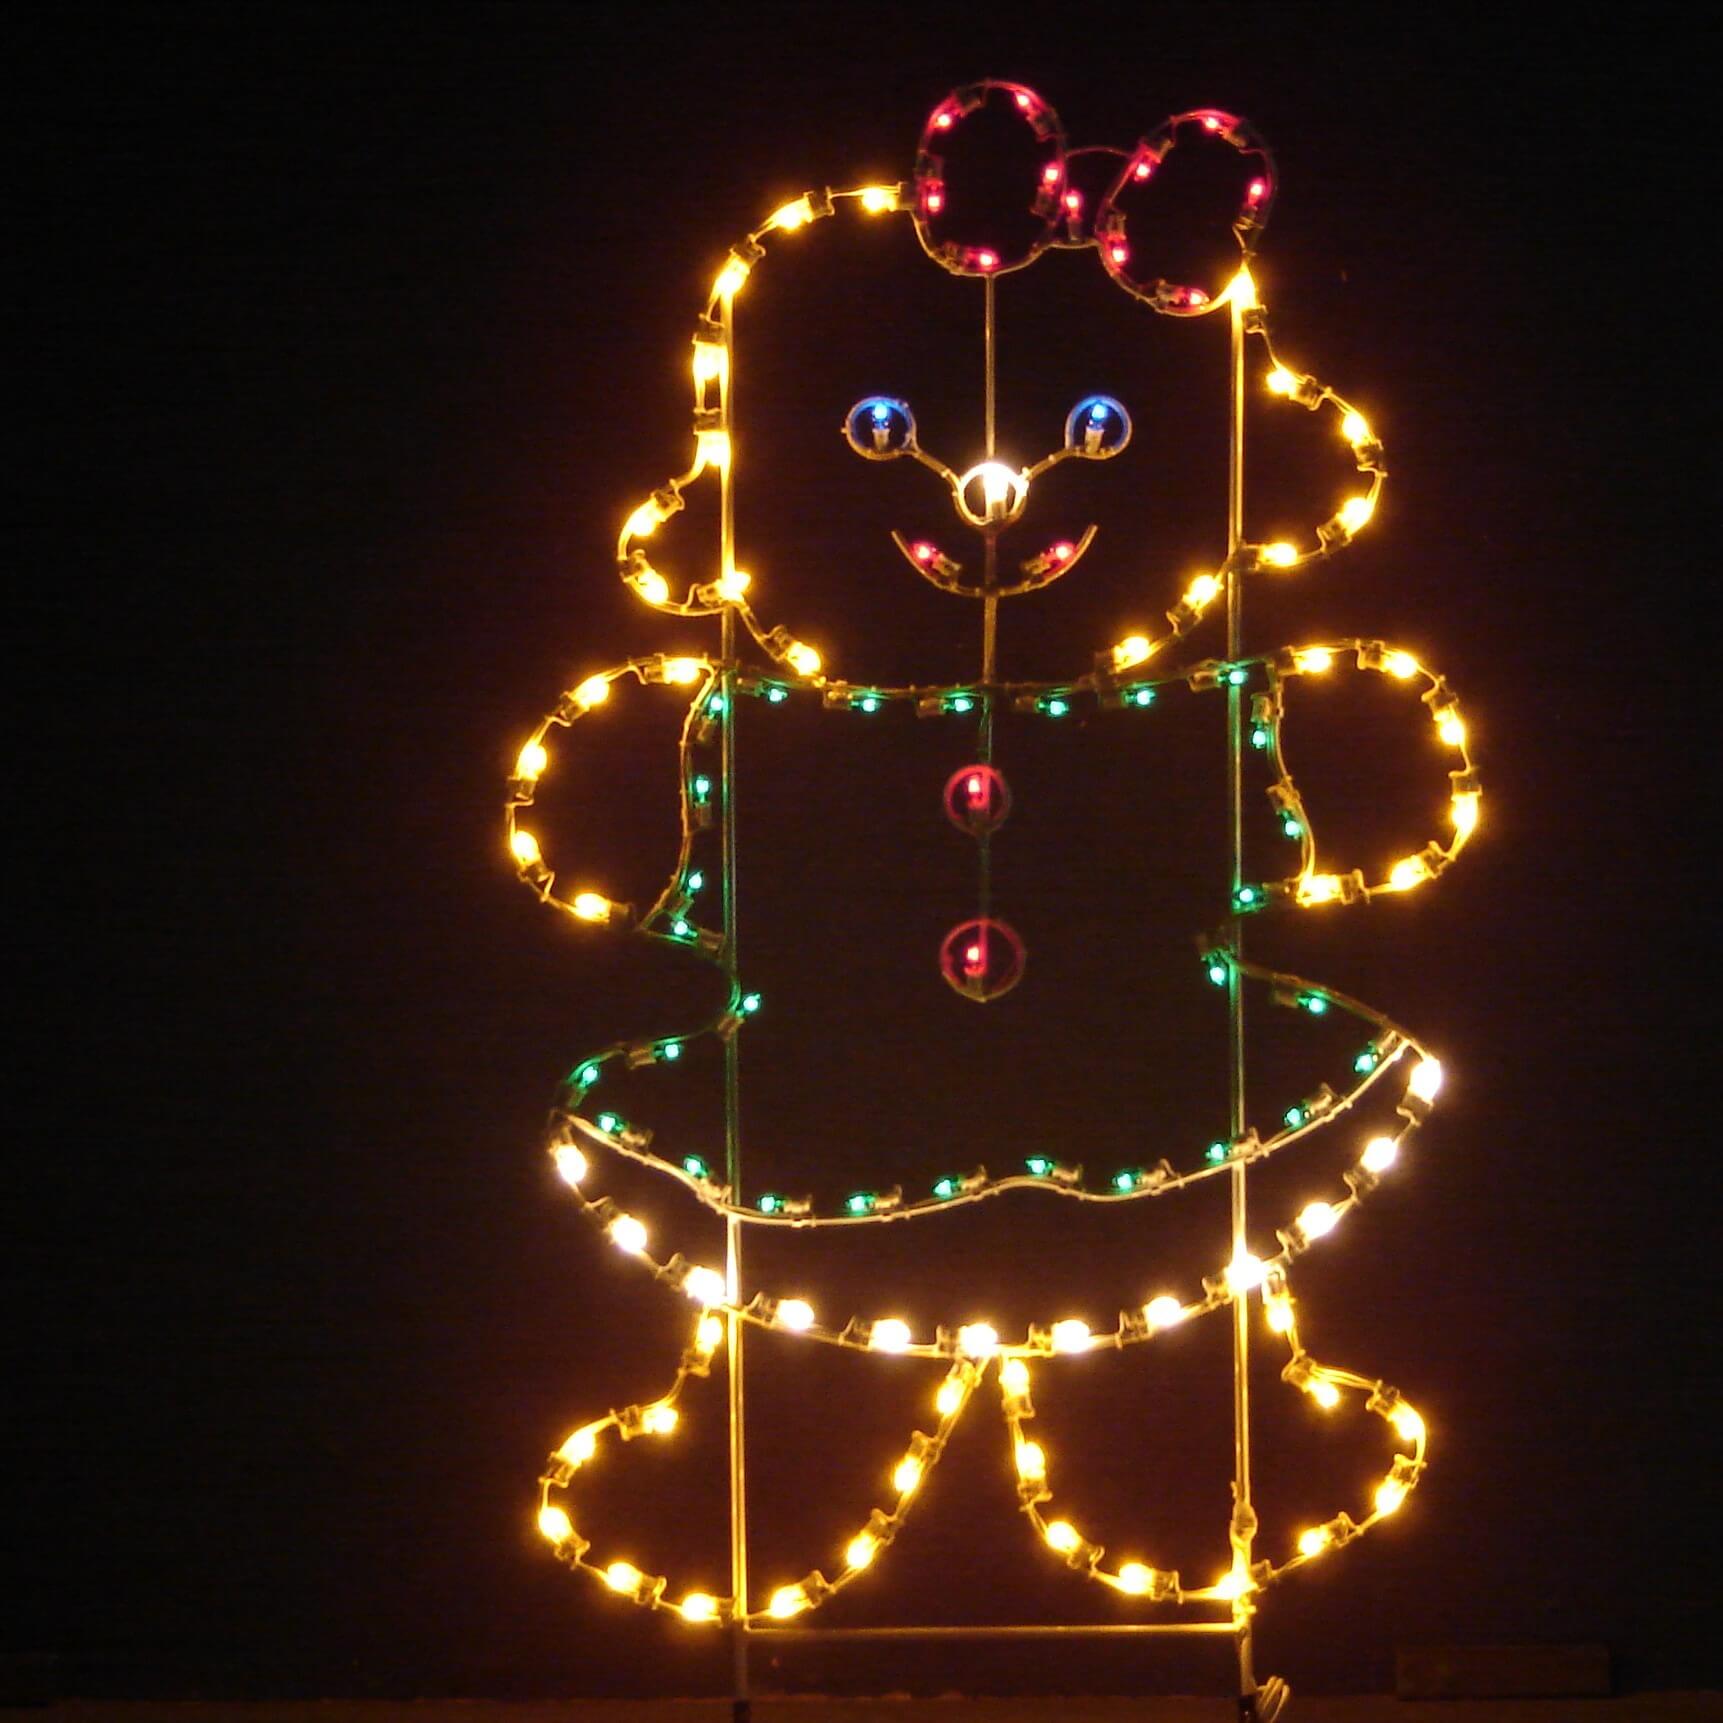 6' Gingerbread Girl Holiday Light Display - Creative Displays